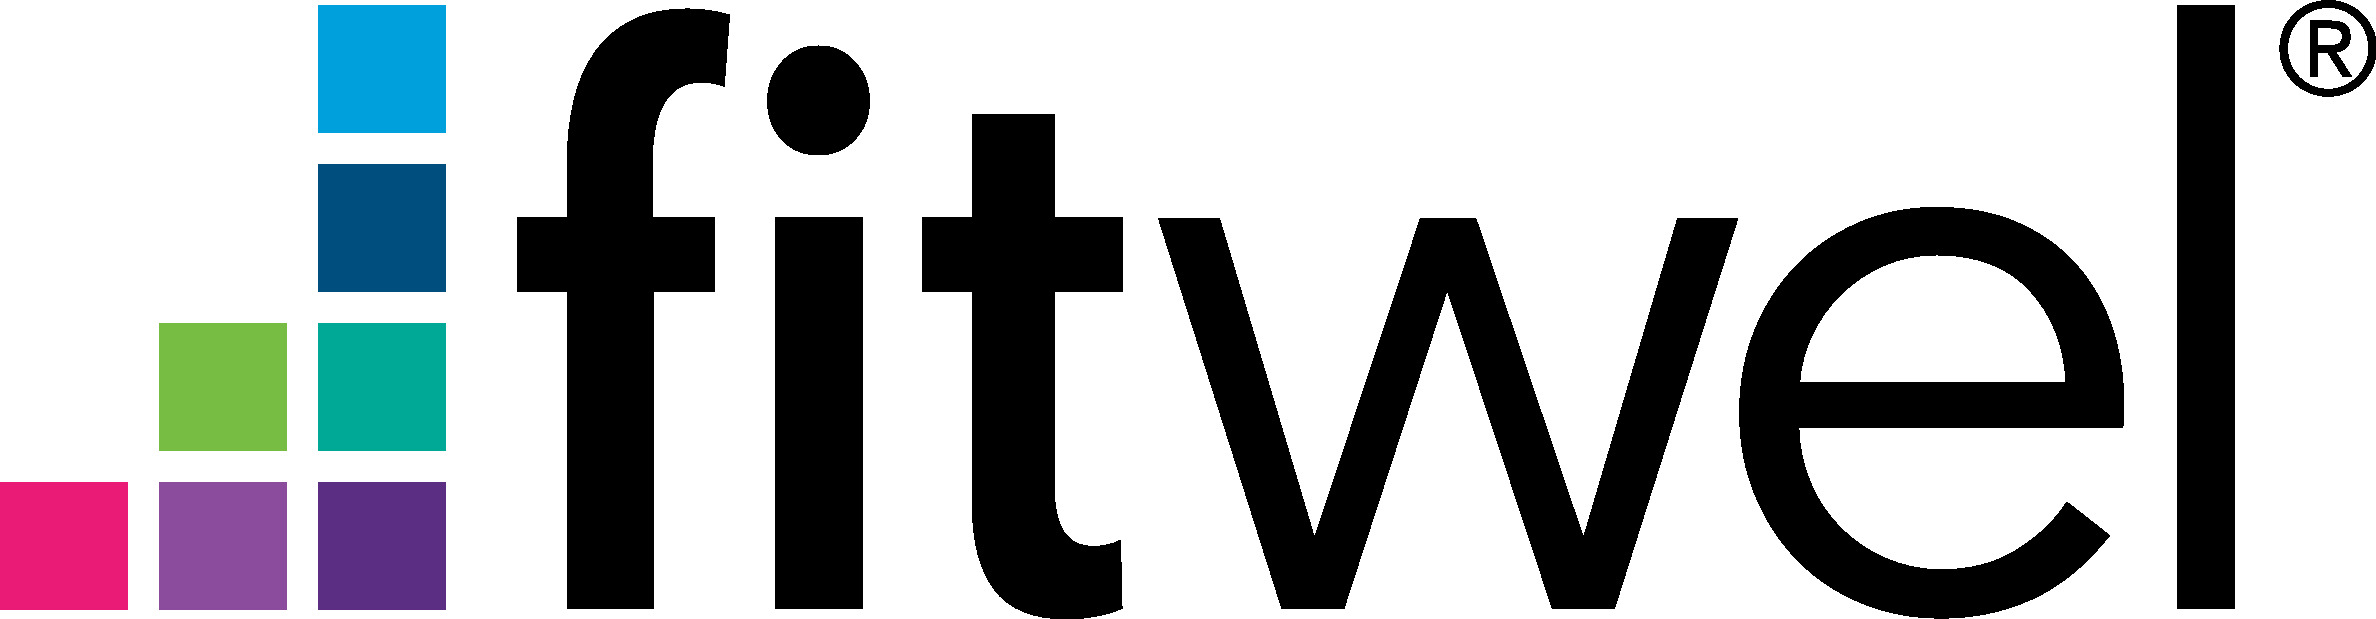 Fitwel Logo